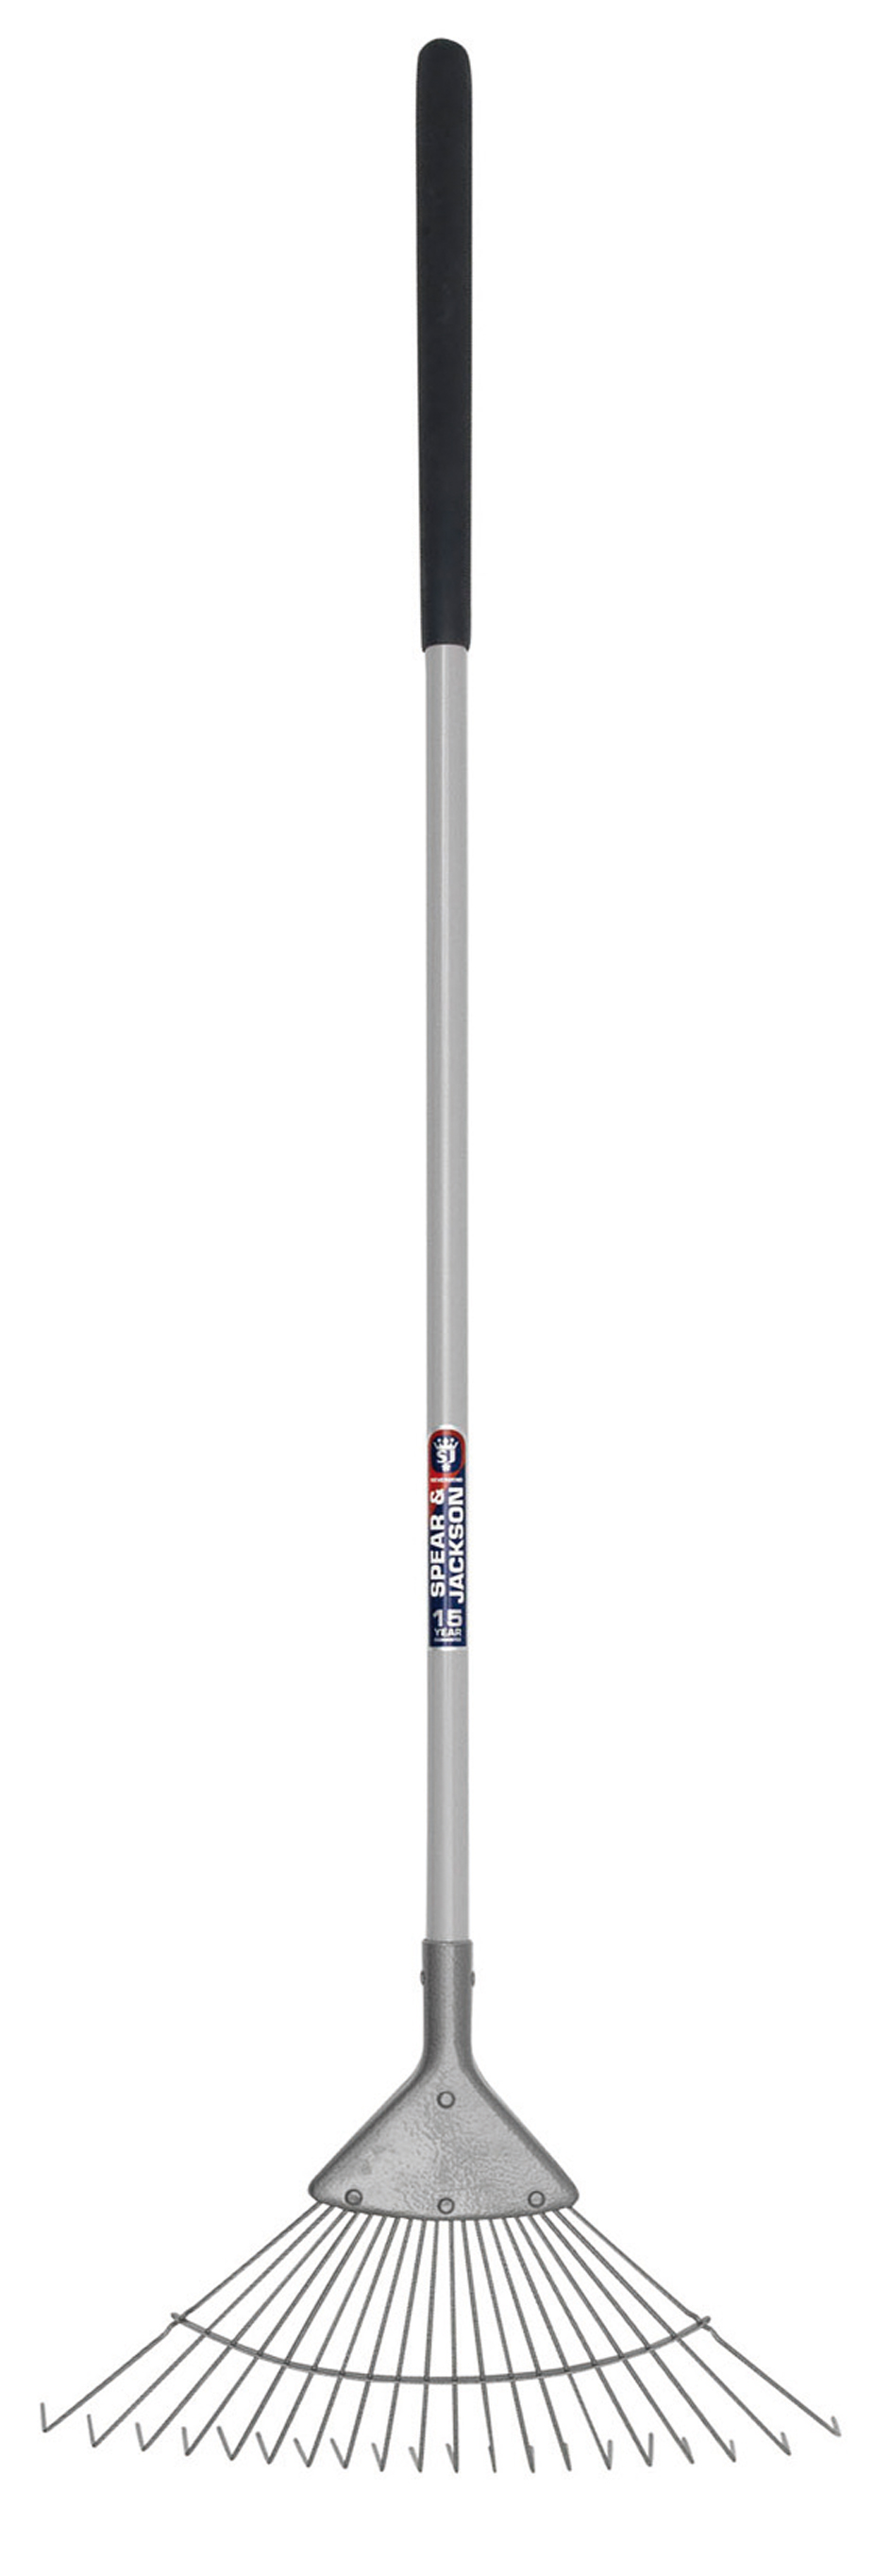 Spear & Jackson Neverbend Carbon Adjustable Lawn Rake 3882NB pvc grip lightweight aluminium shaft